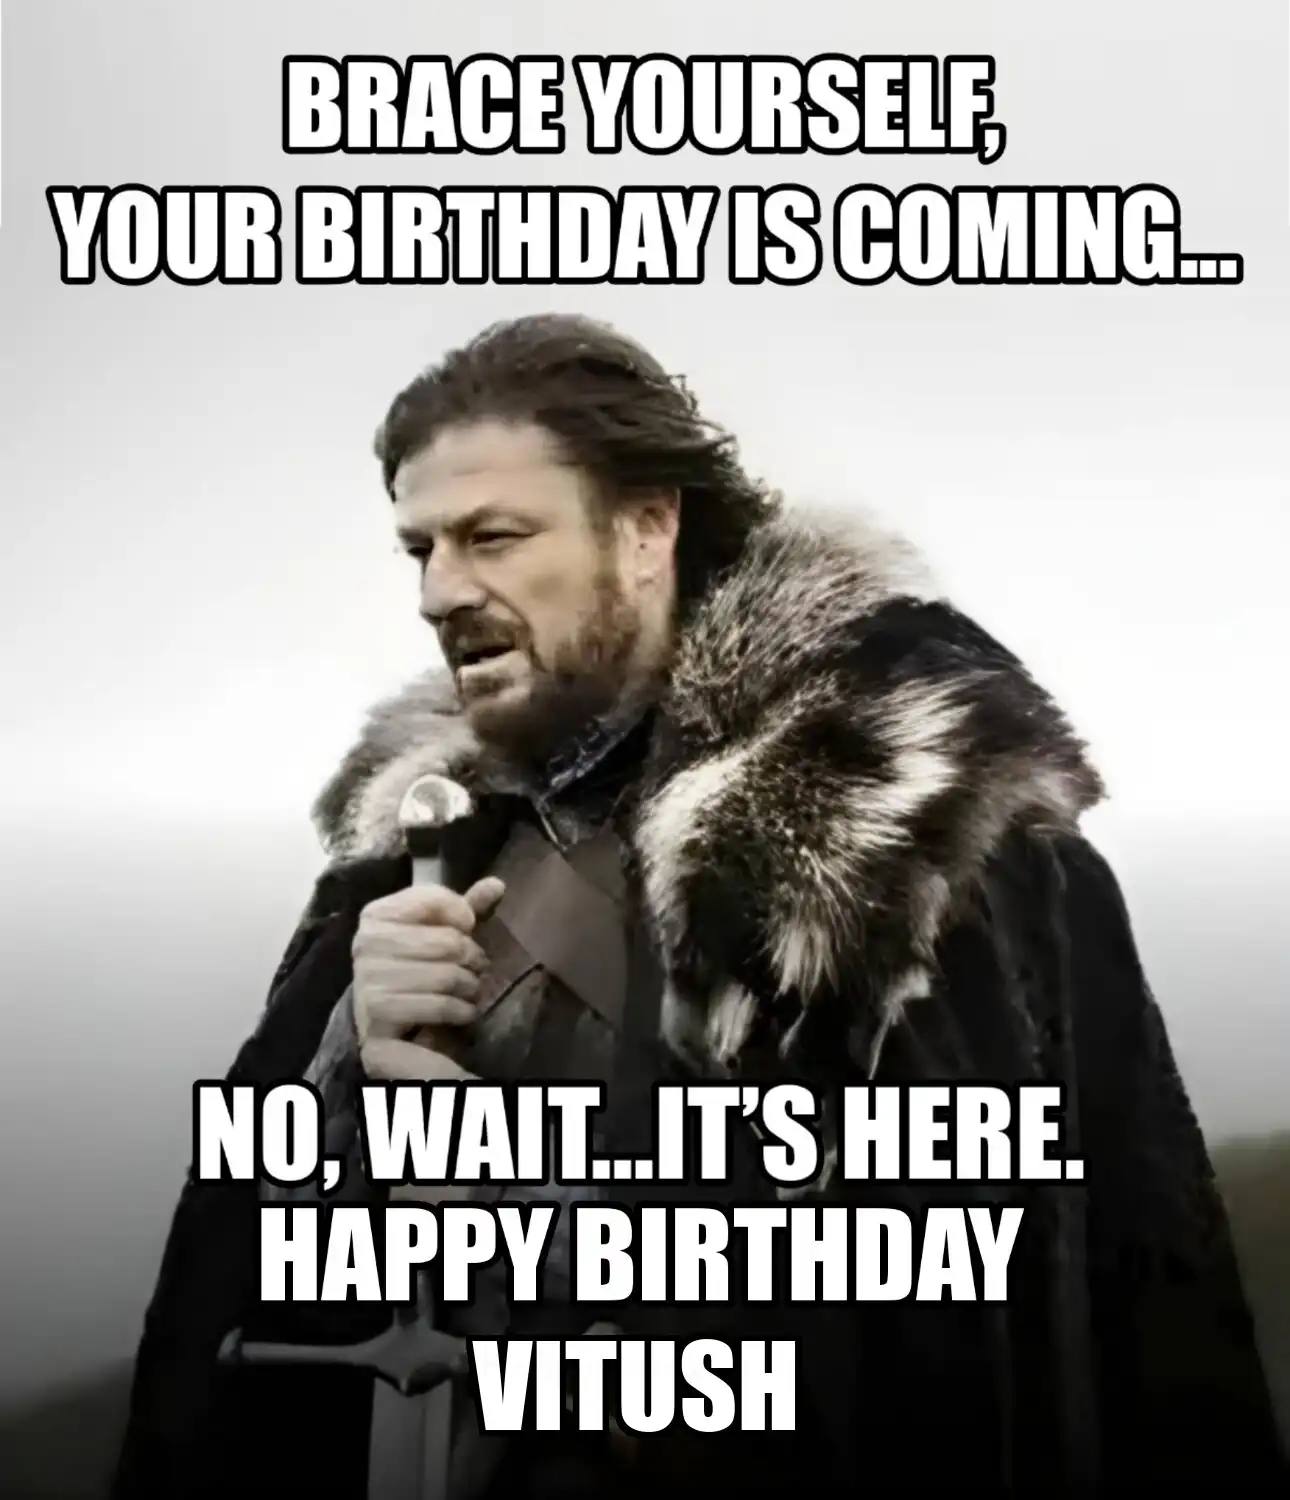 Happy Birthday Vitush Brace Yourself Your Birthday Is Coming Meme